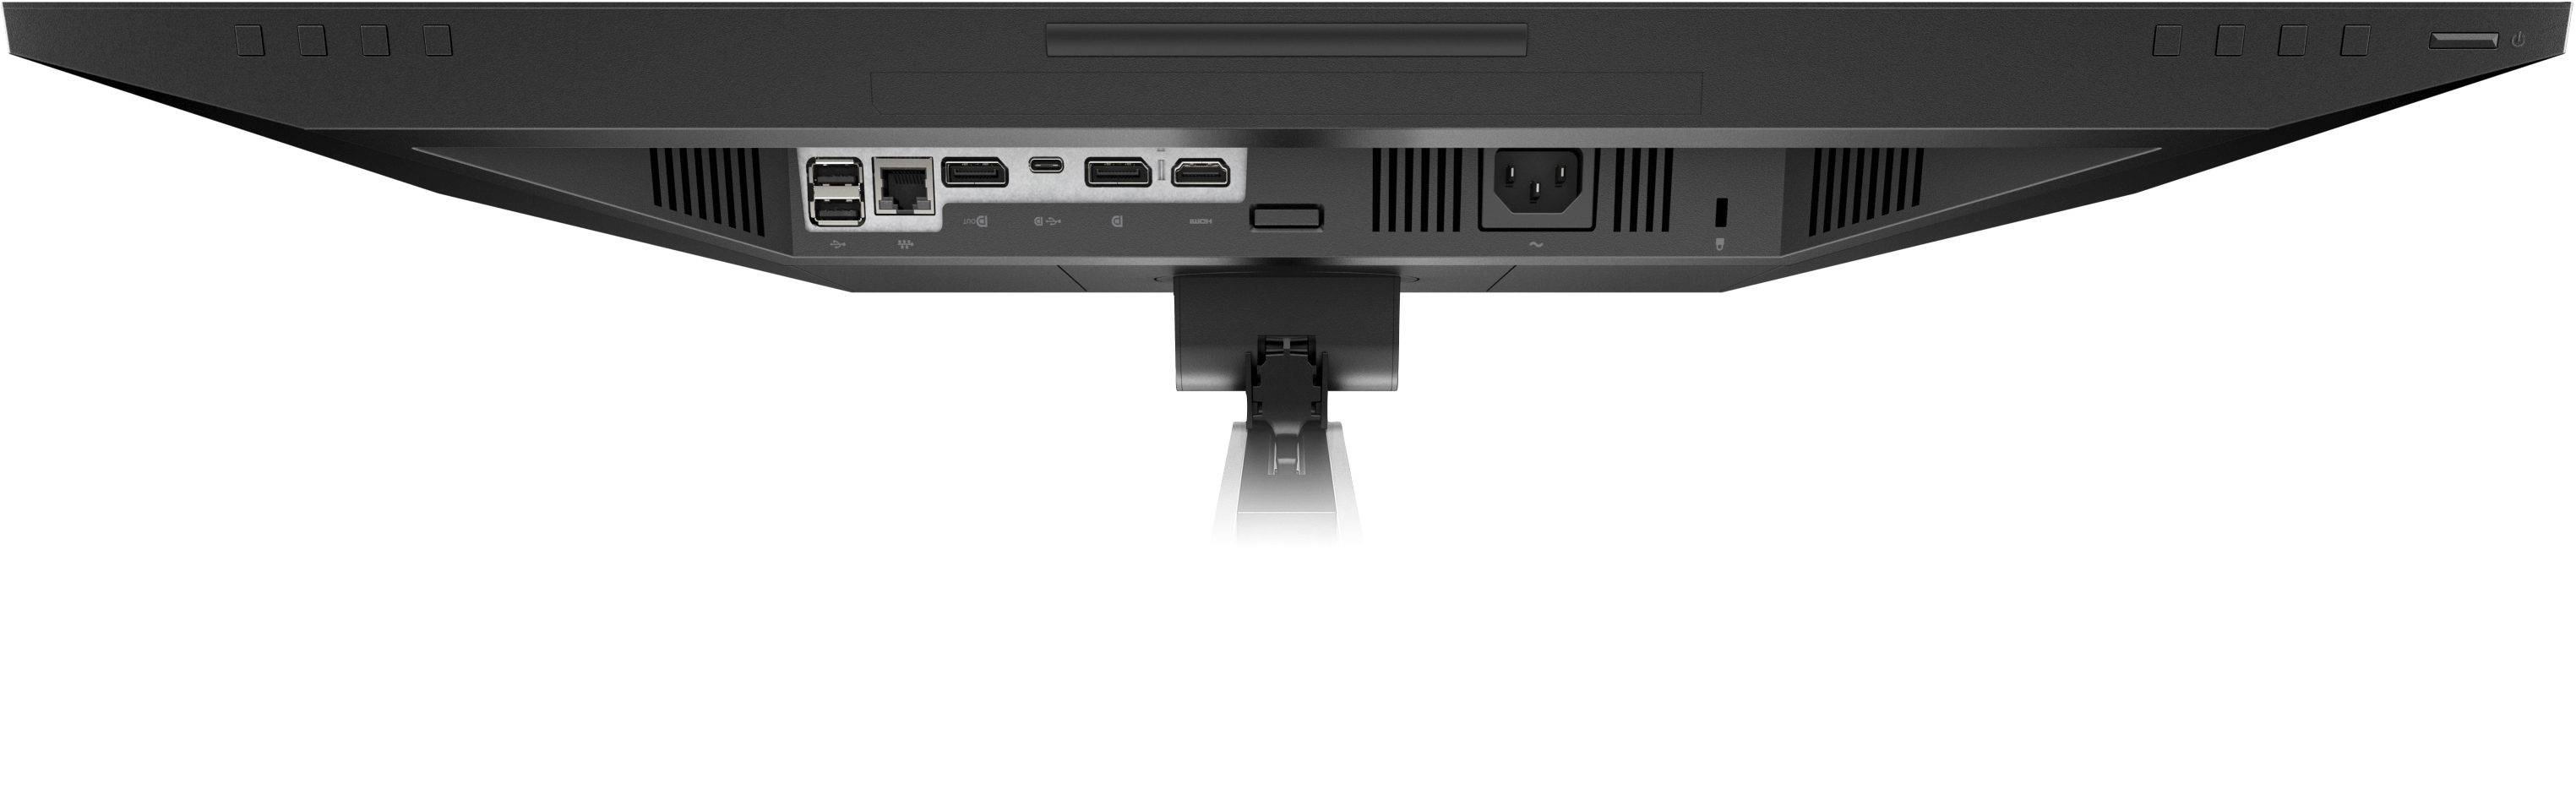 MON: HP E27m G4 USB-C Conf QHD Monitor